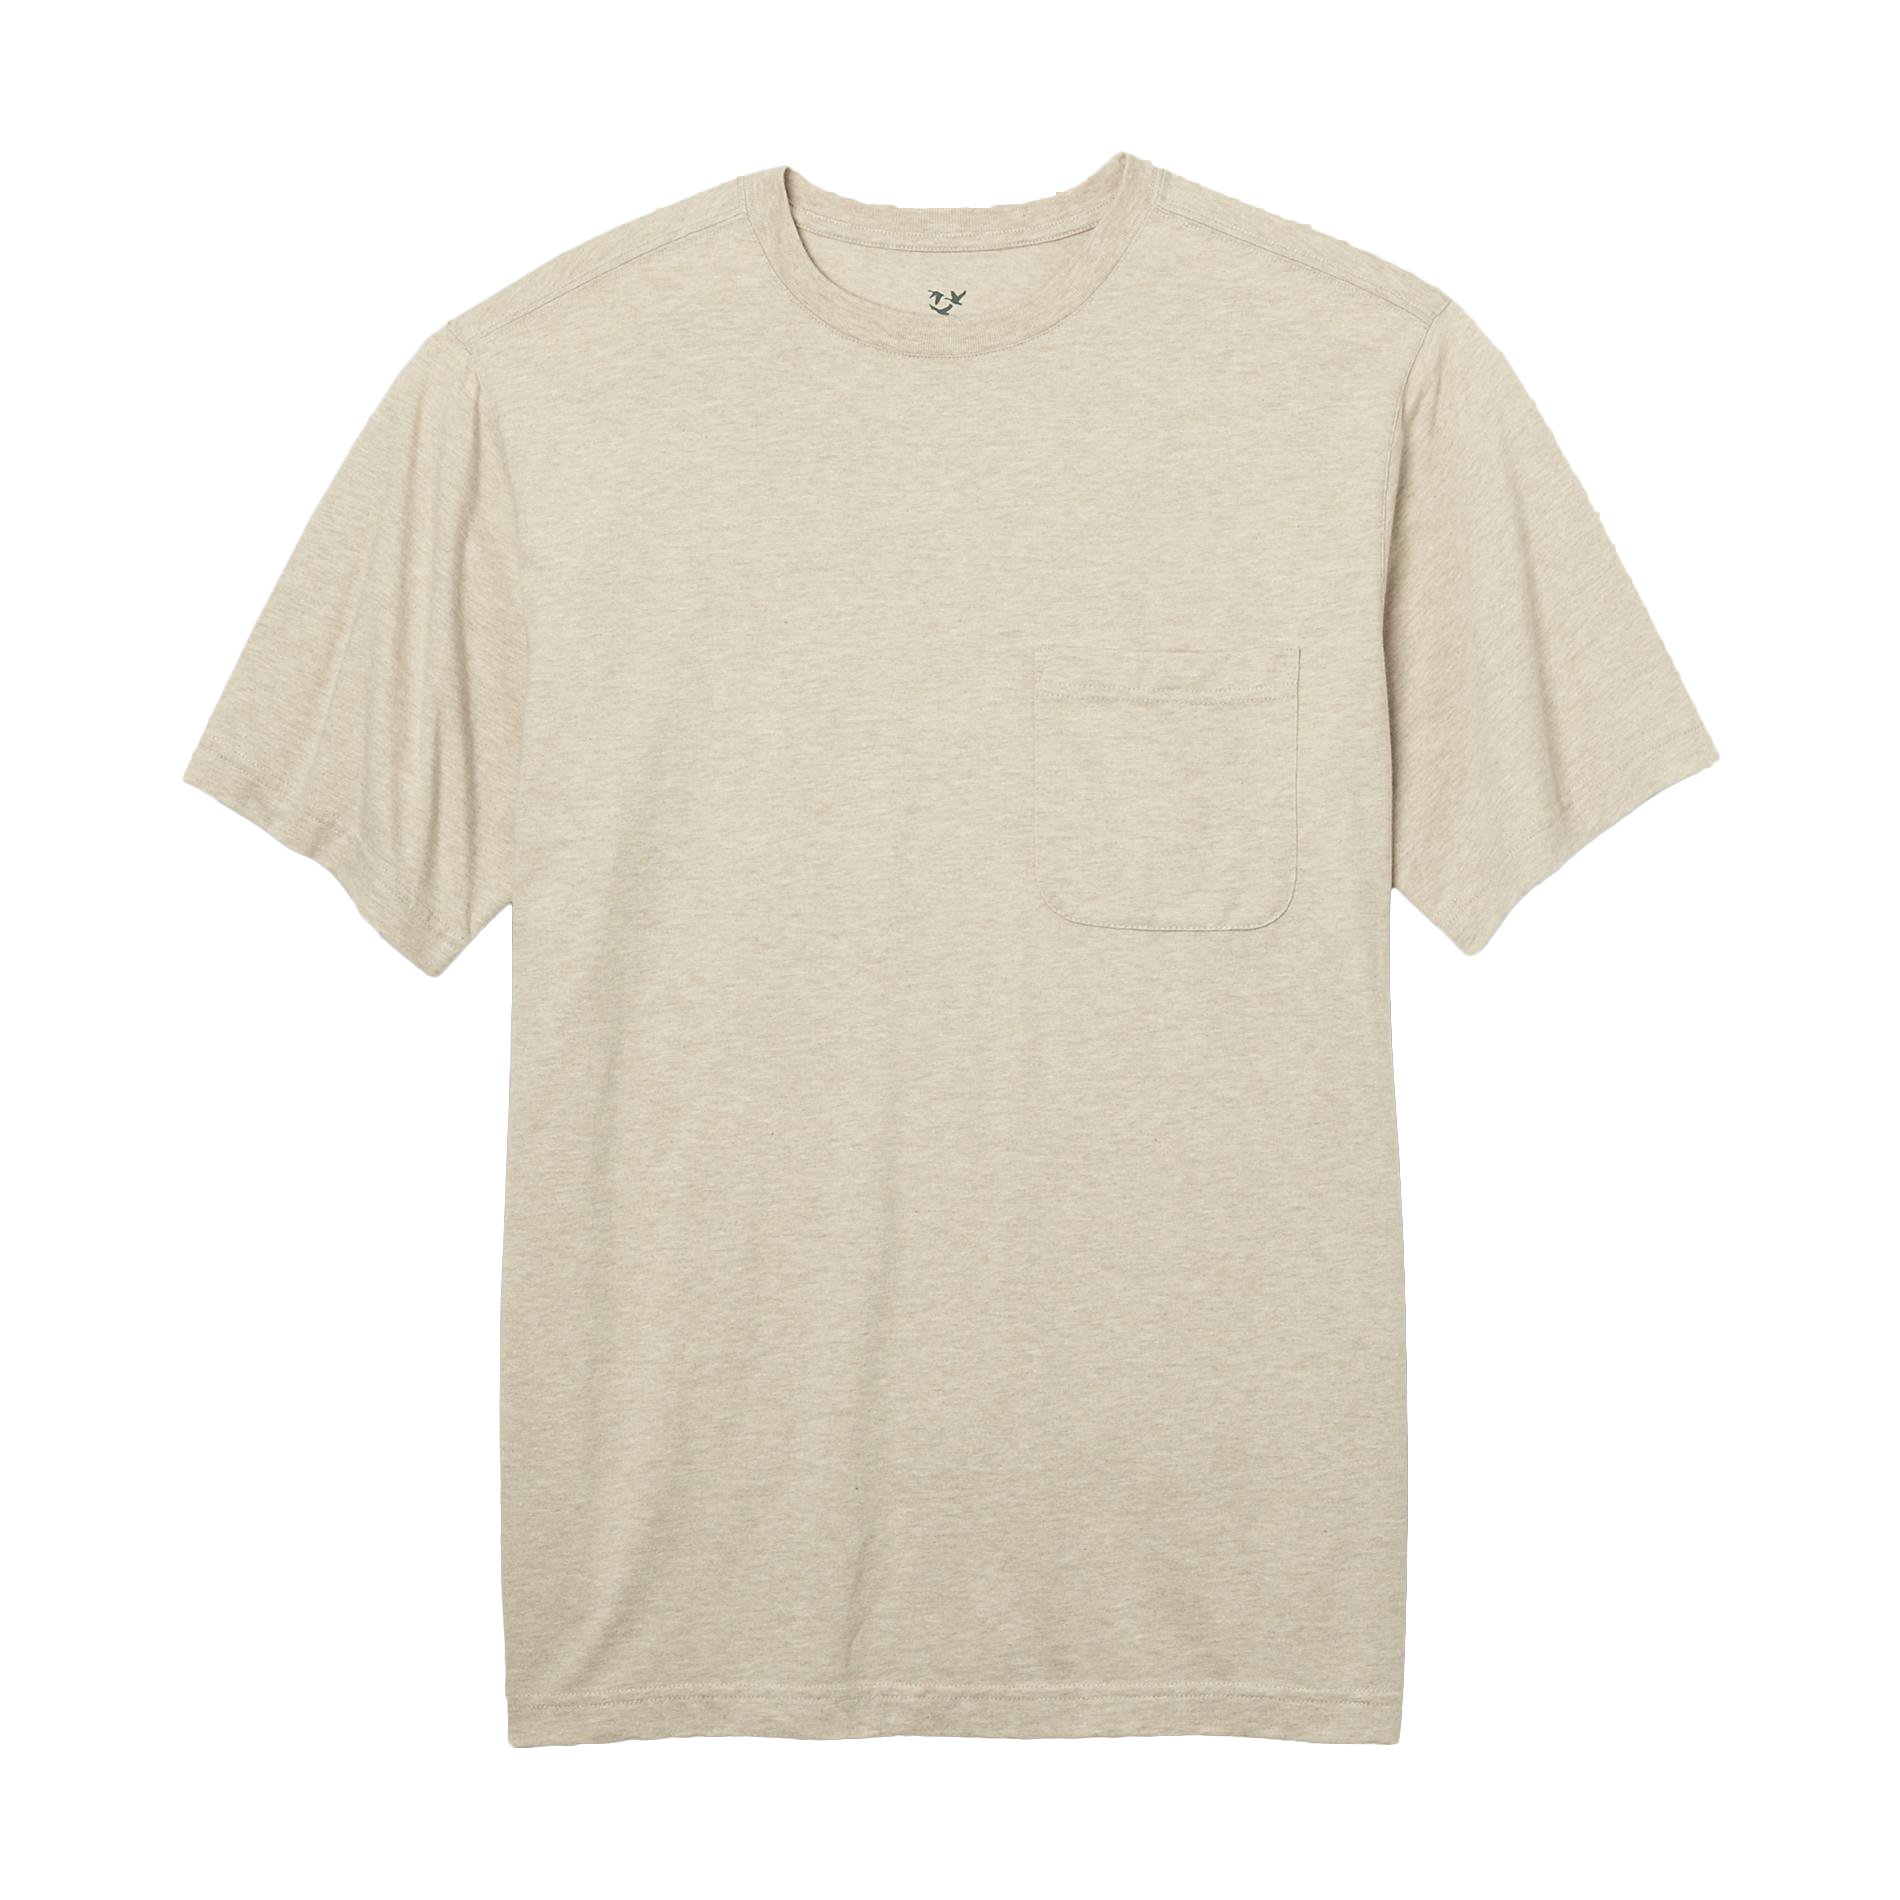 Outdoor Life Men's Big & Tall Single-Pocket T-Shirt